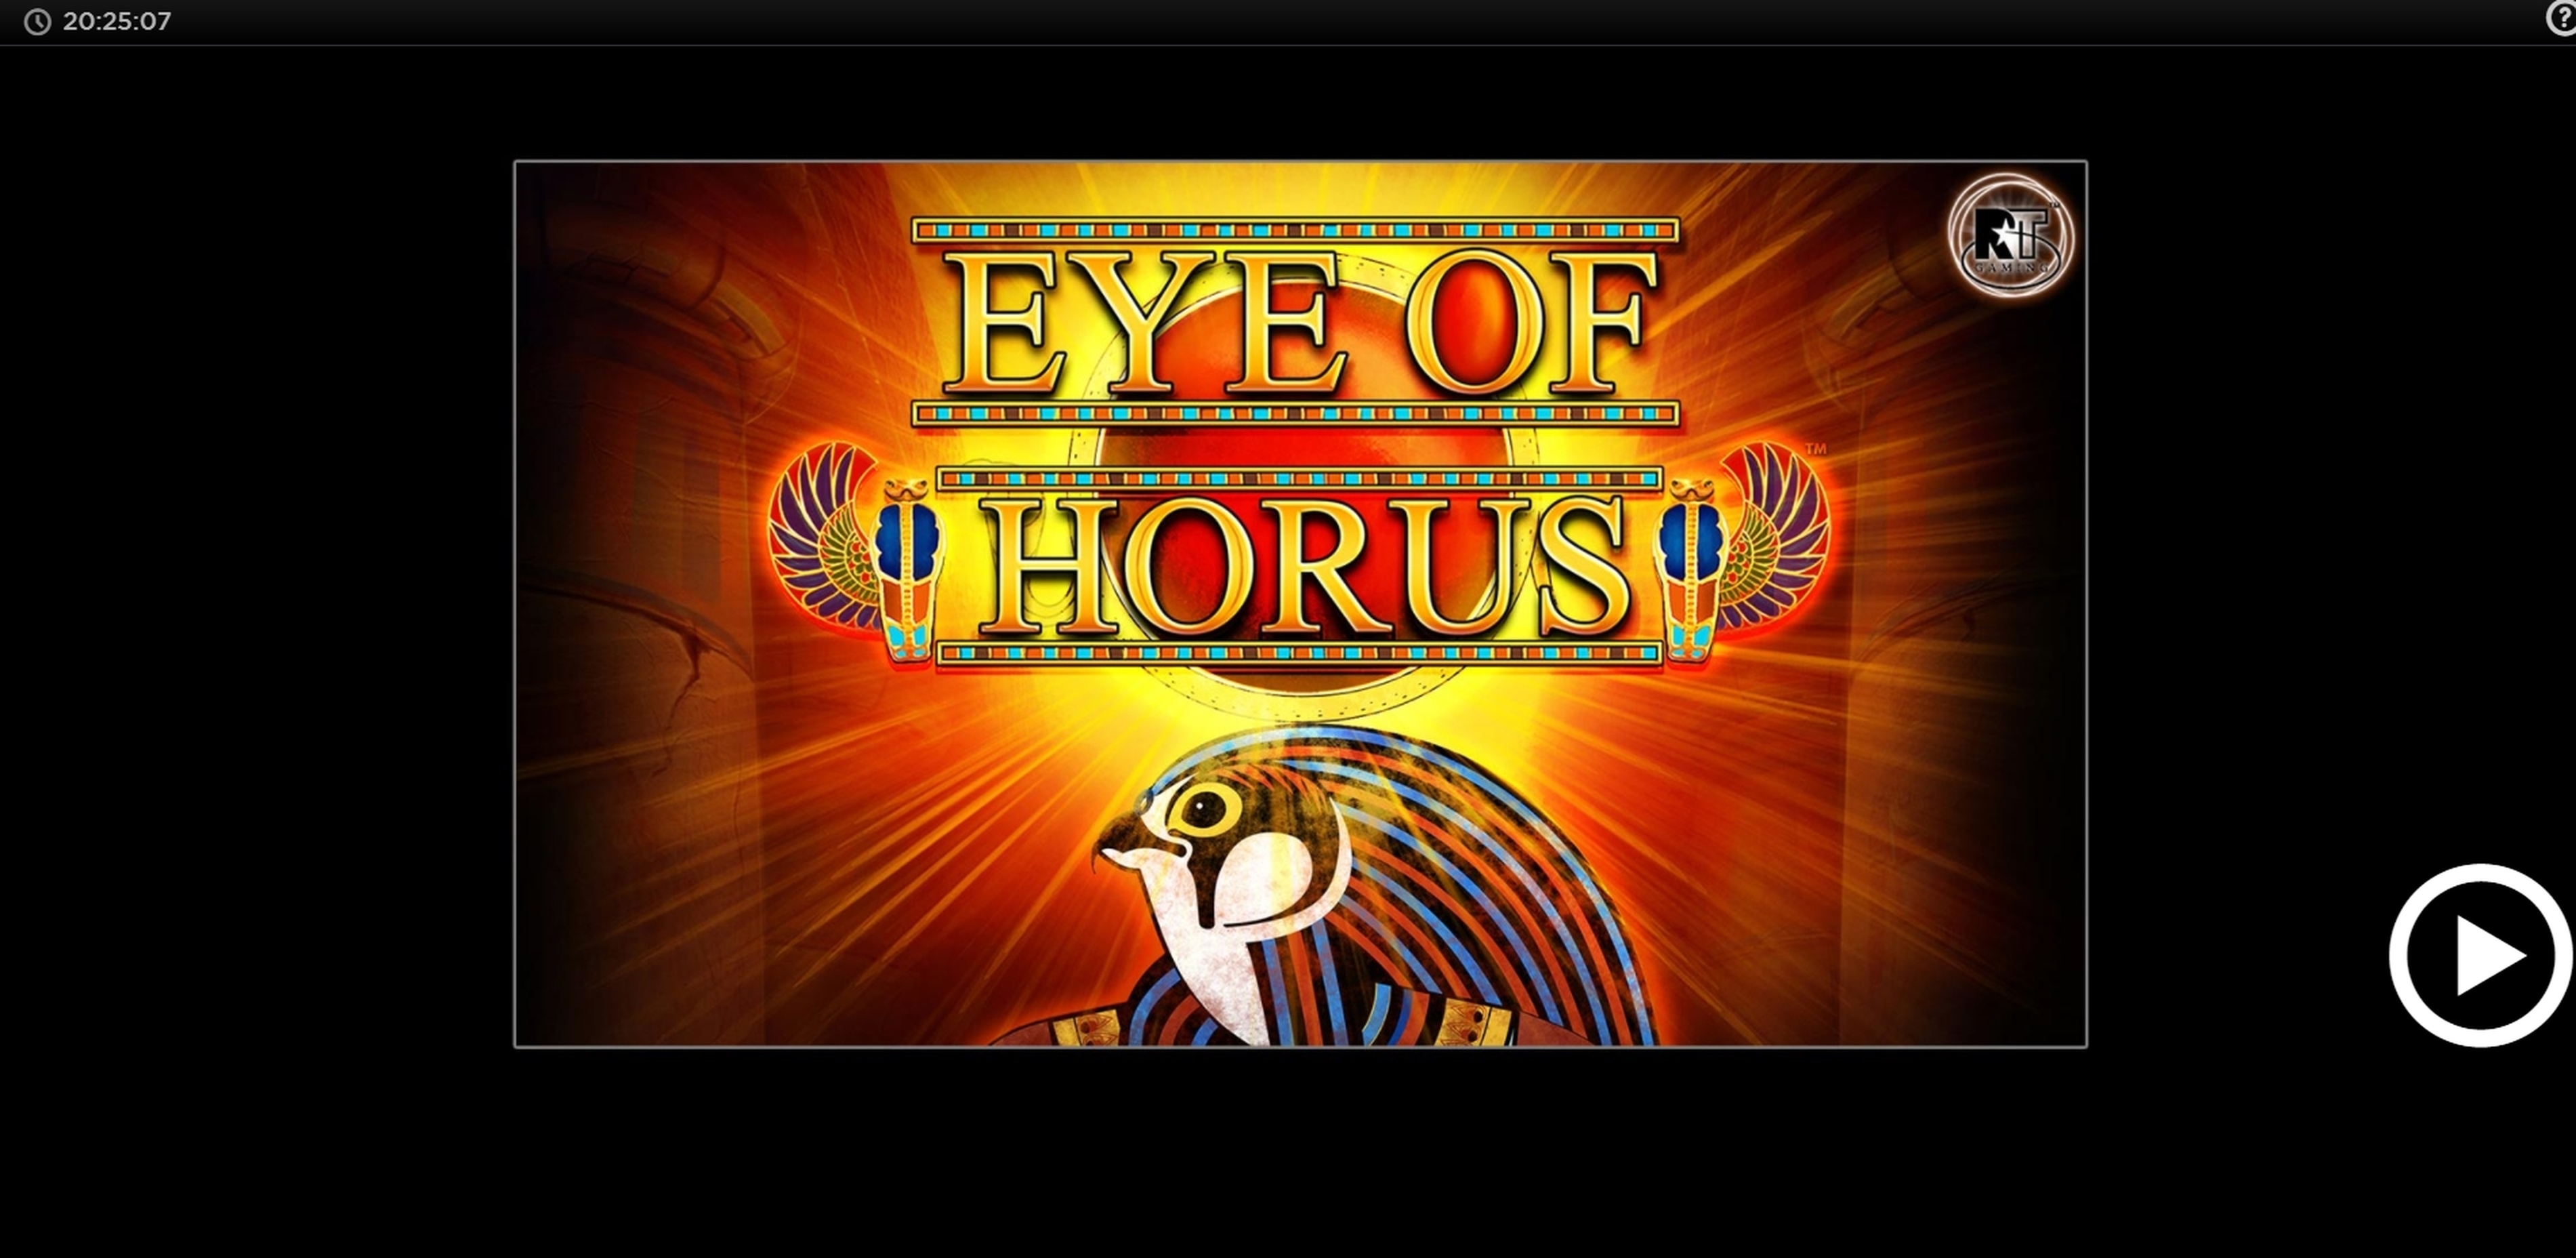 Play Eye of Horus Free Casino Slot Game by Reel Time Gaming